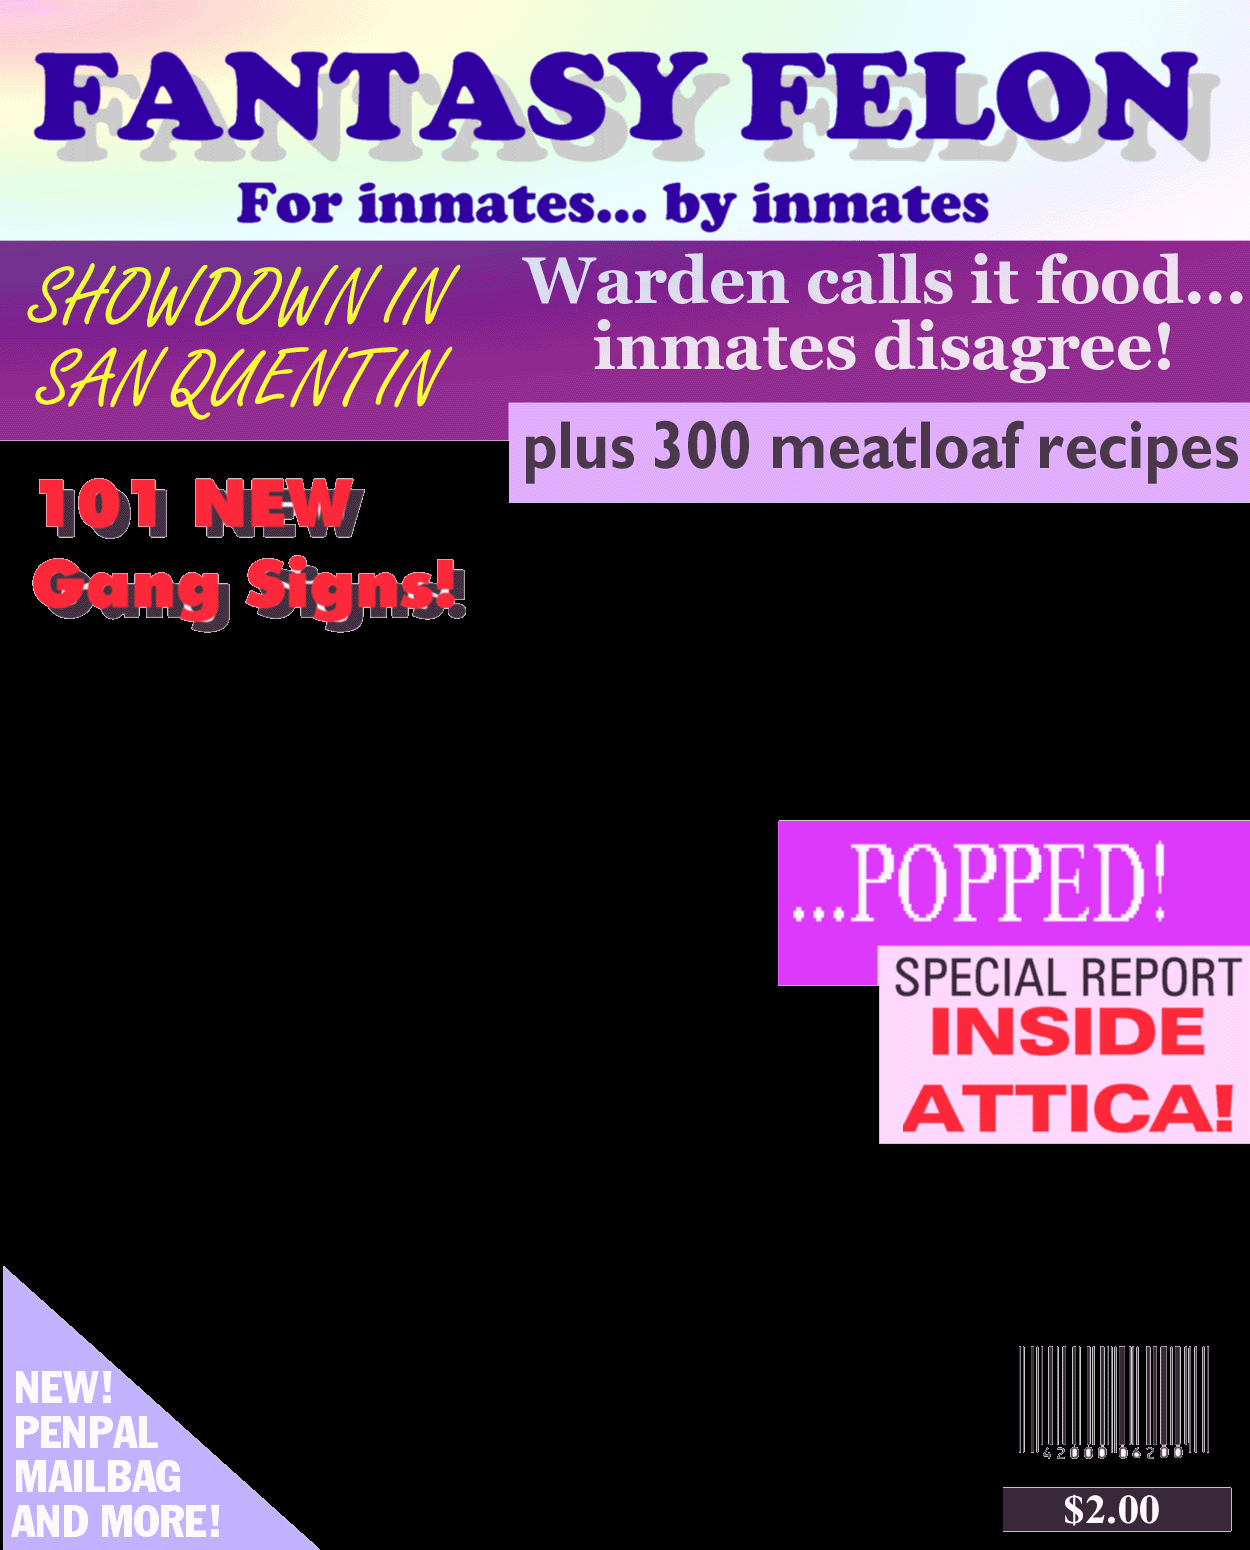 Free Personalized Magazine Covers Templates Inspirational Jail Mug Shot Photo Generator Funny Prison Magazine Covers